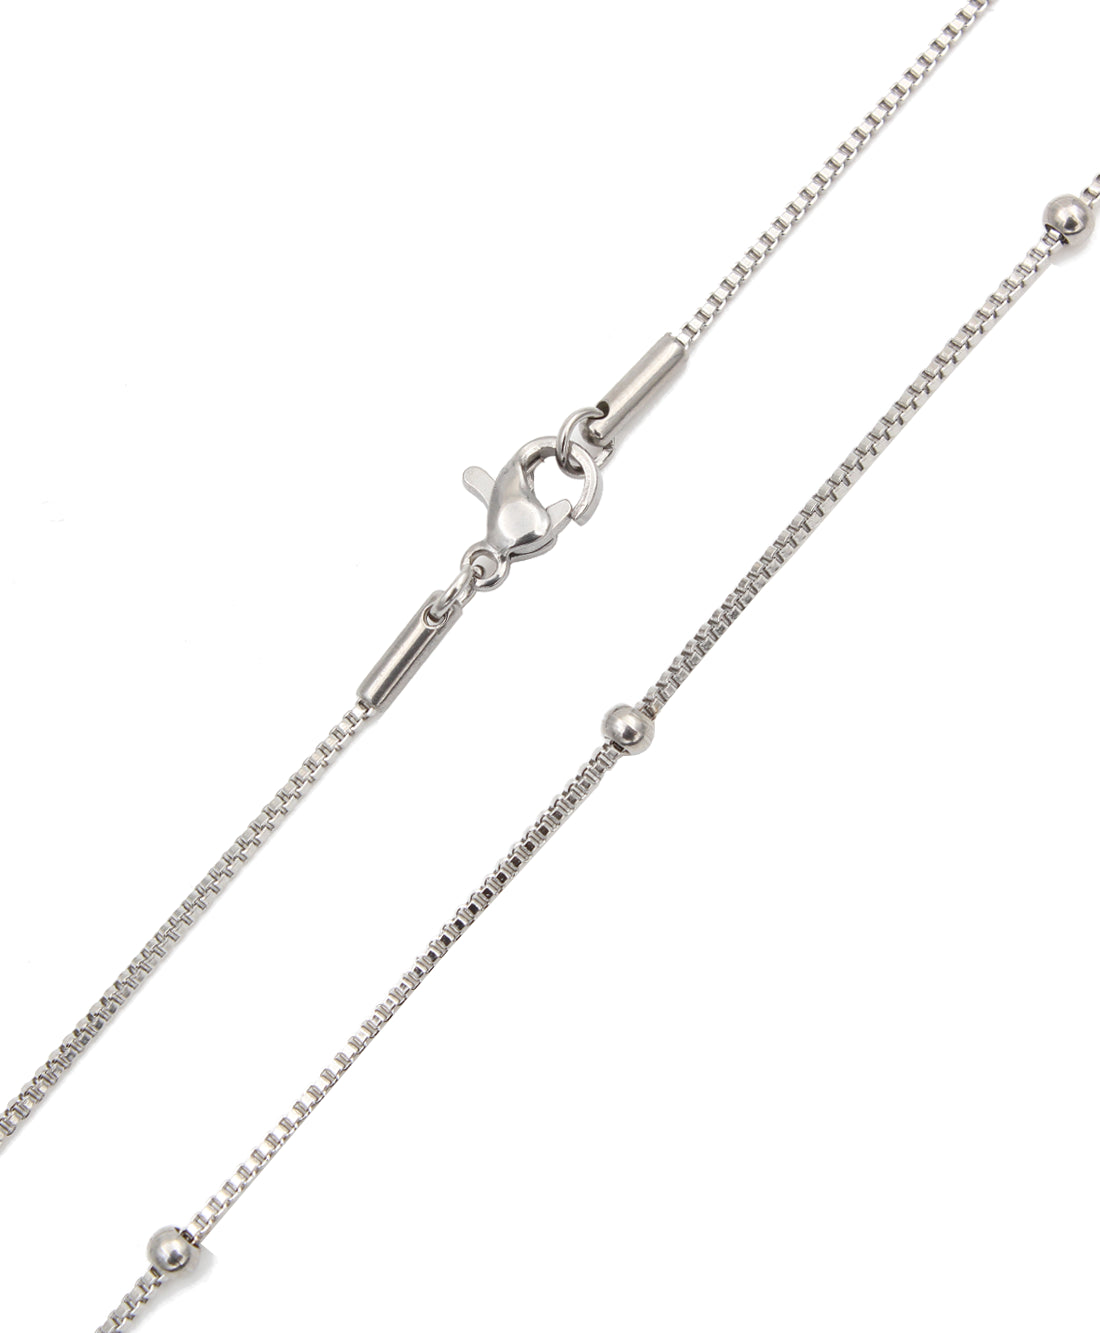 Long necklace / Necklace - Silver - Pregnancy bola 110cm